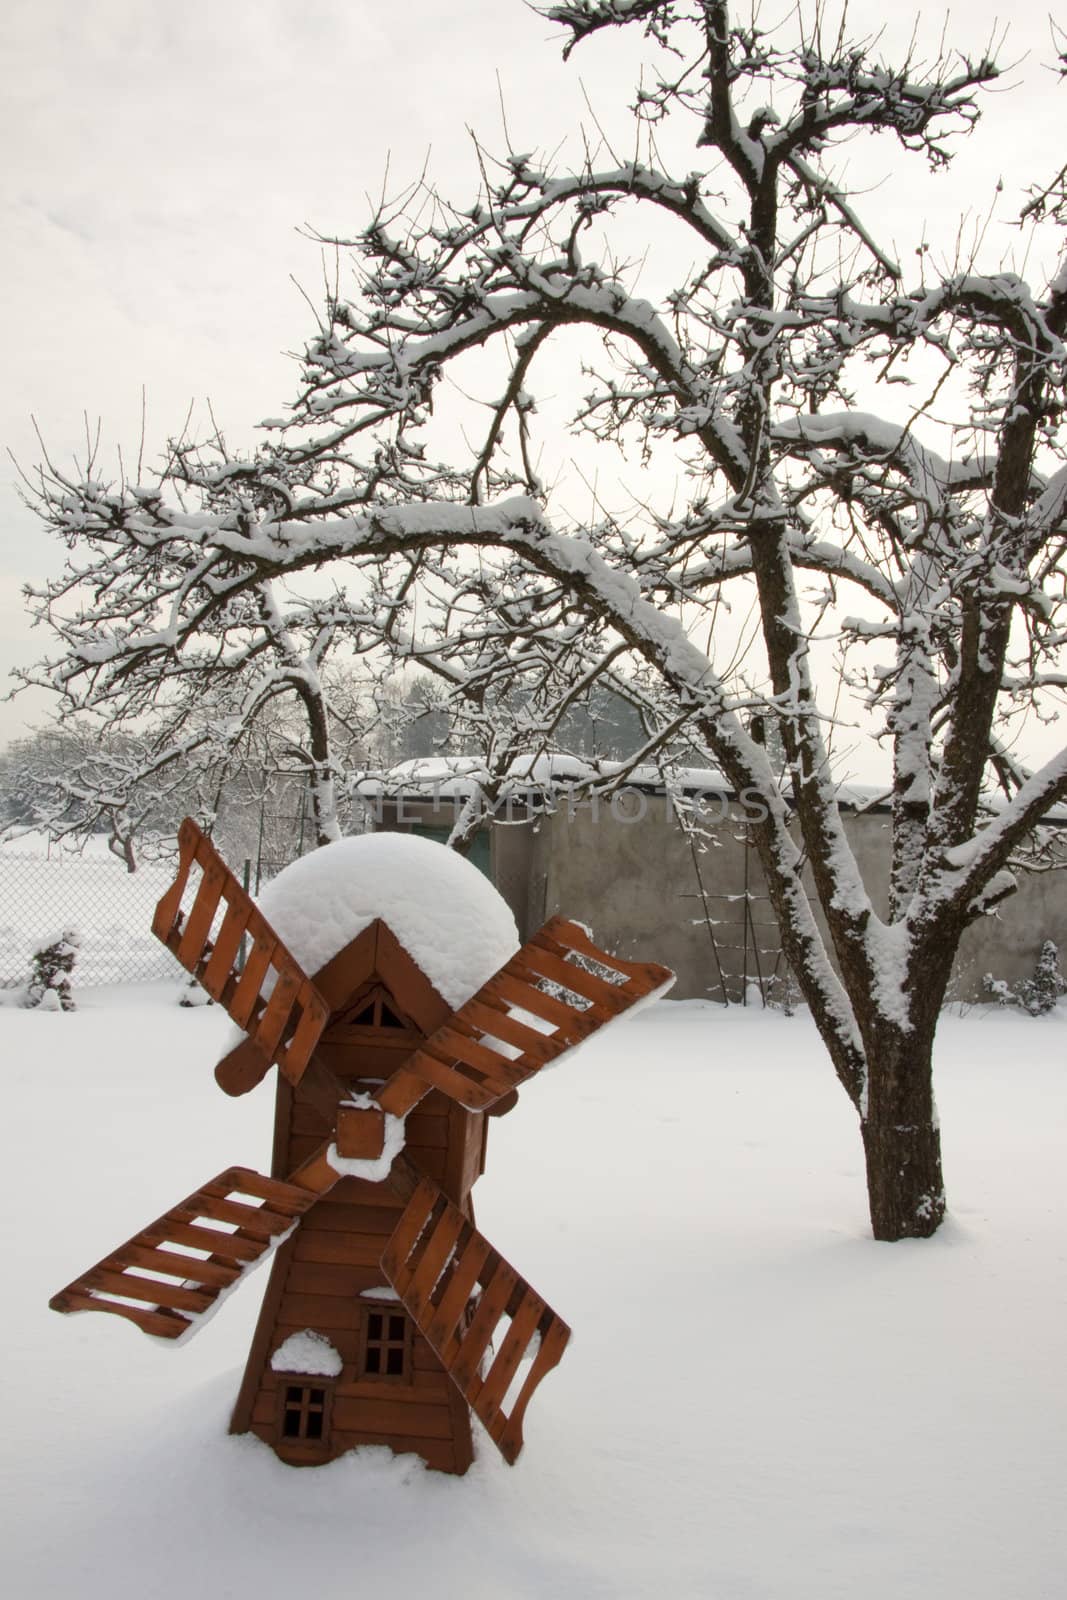 Small wooden windmill in polish garden in winter.